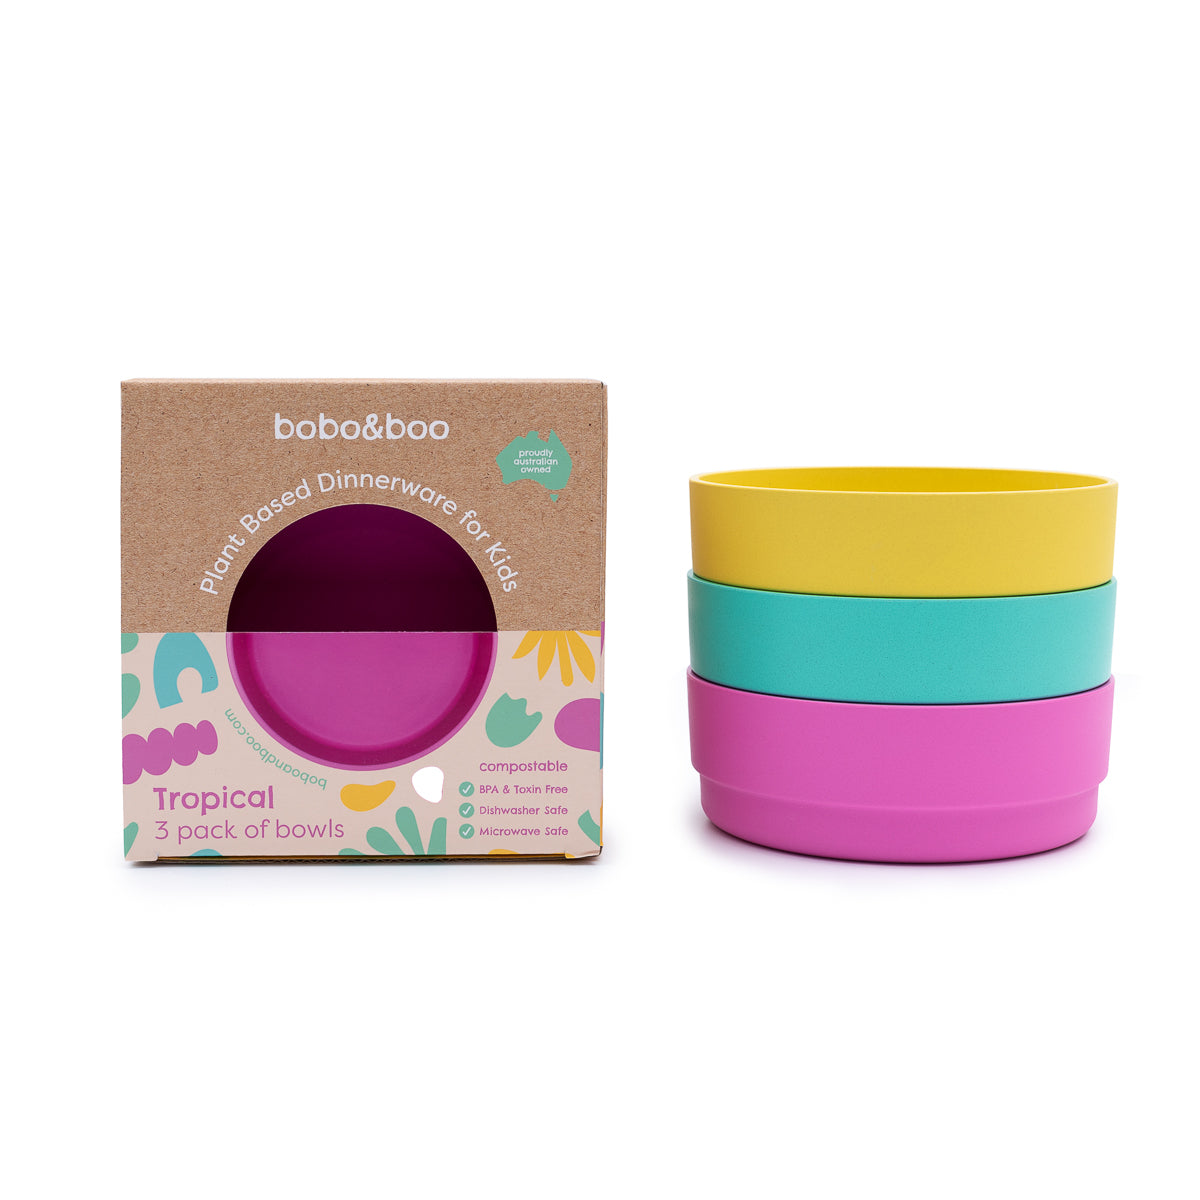 Bobo&Boo Plant-Based Bowls- 3 Pack